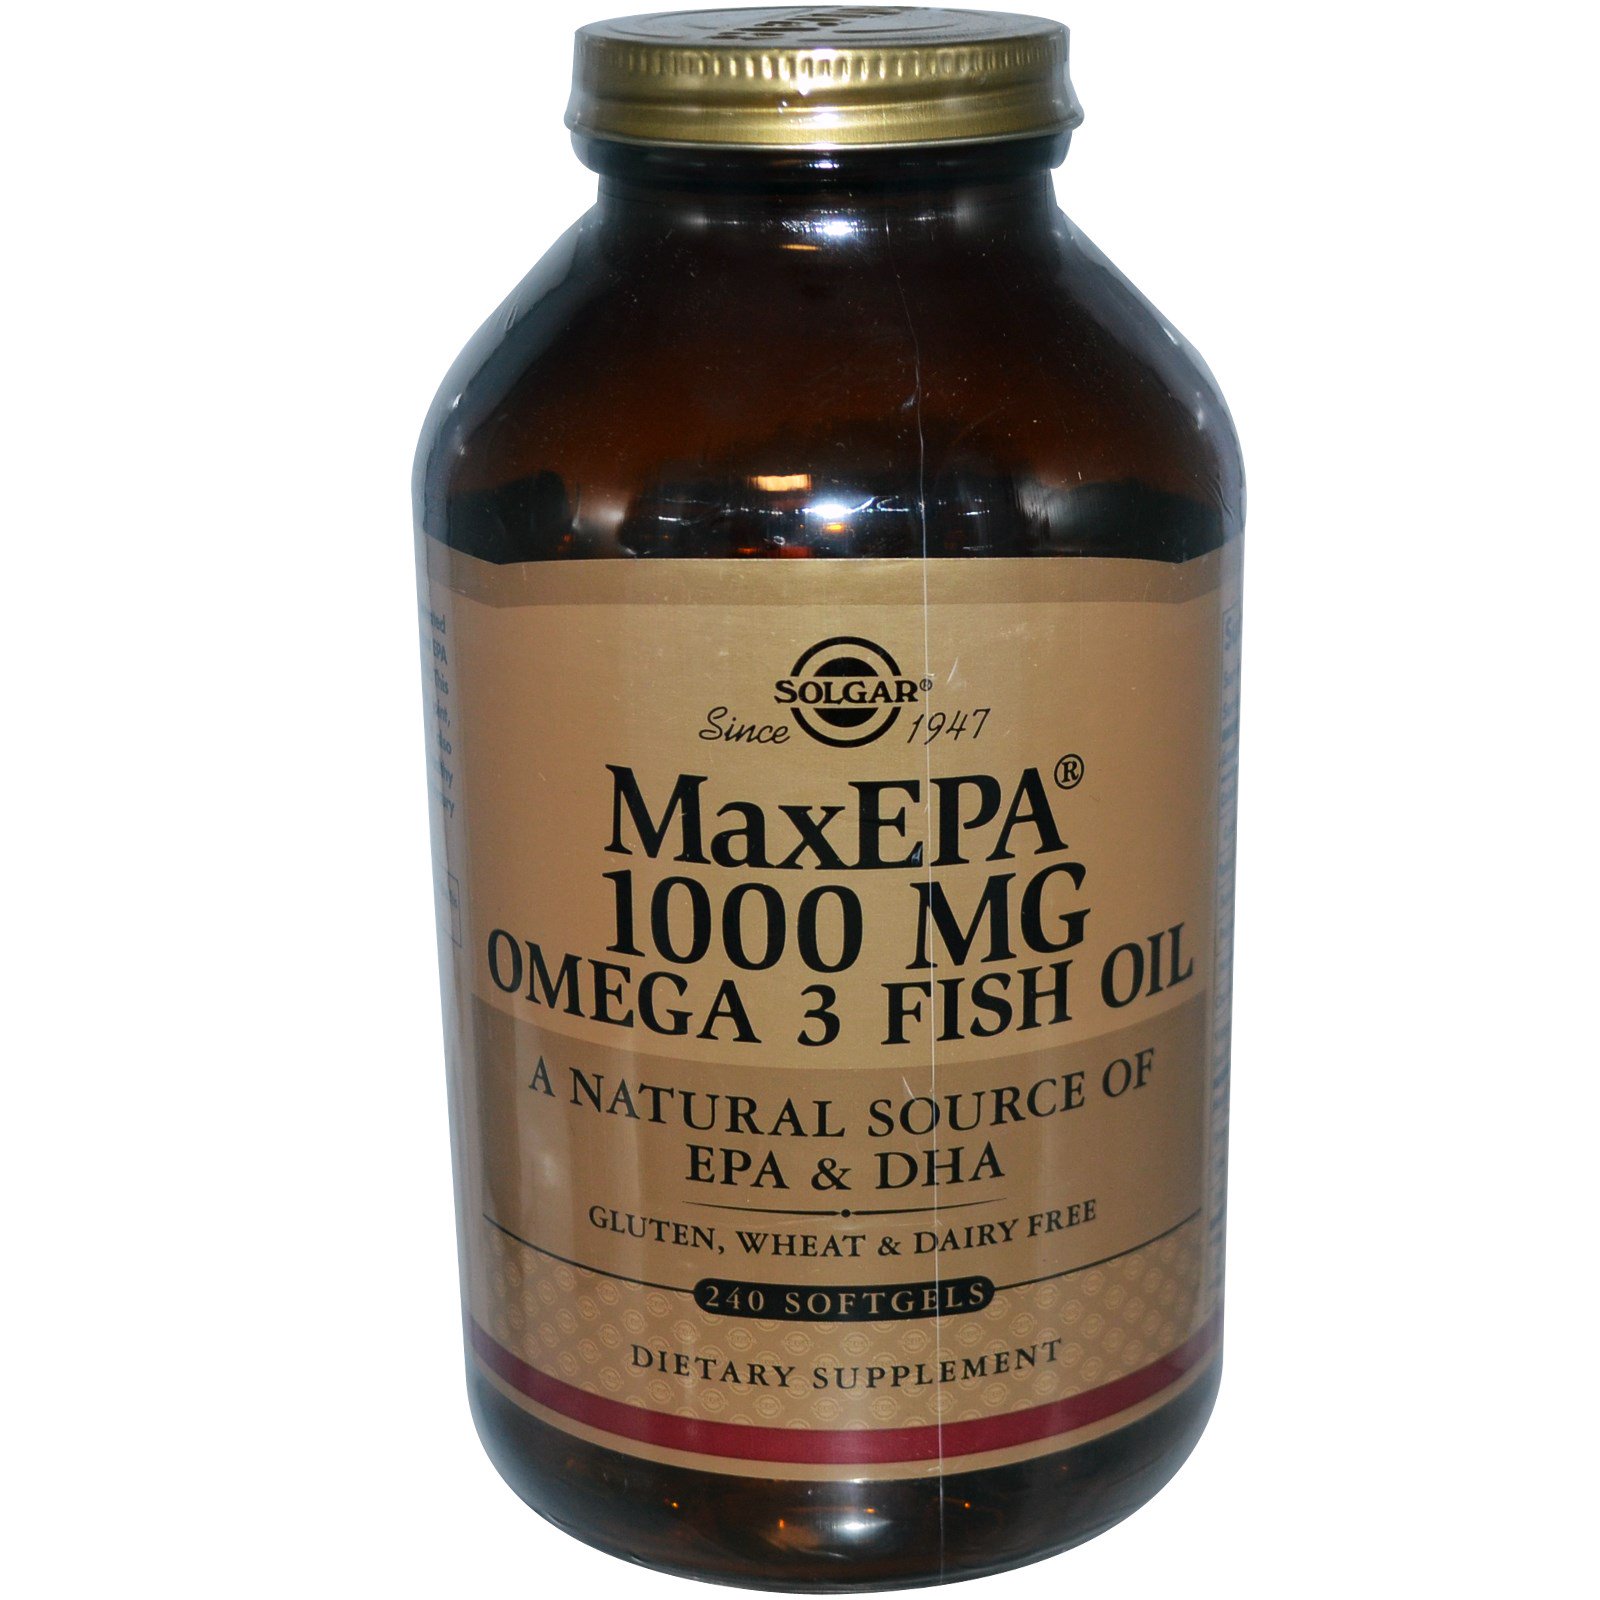 Solgar omega. Омега-3 1000 мг Solgar. Омега-3 1000 мг Солгар. Омега 1000mg Солгар. Solgar Omega 3 Fish Oil EPA DHA.